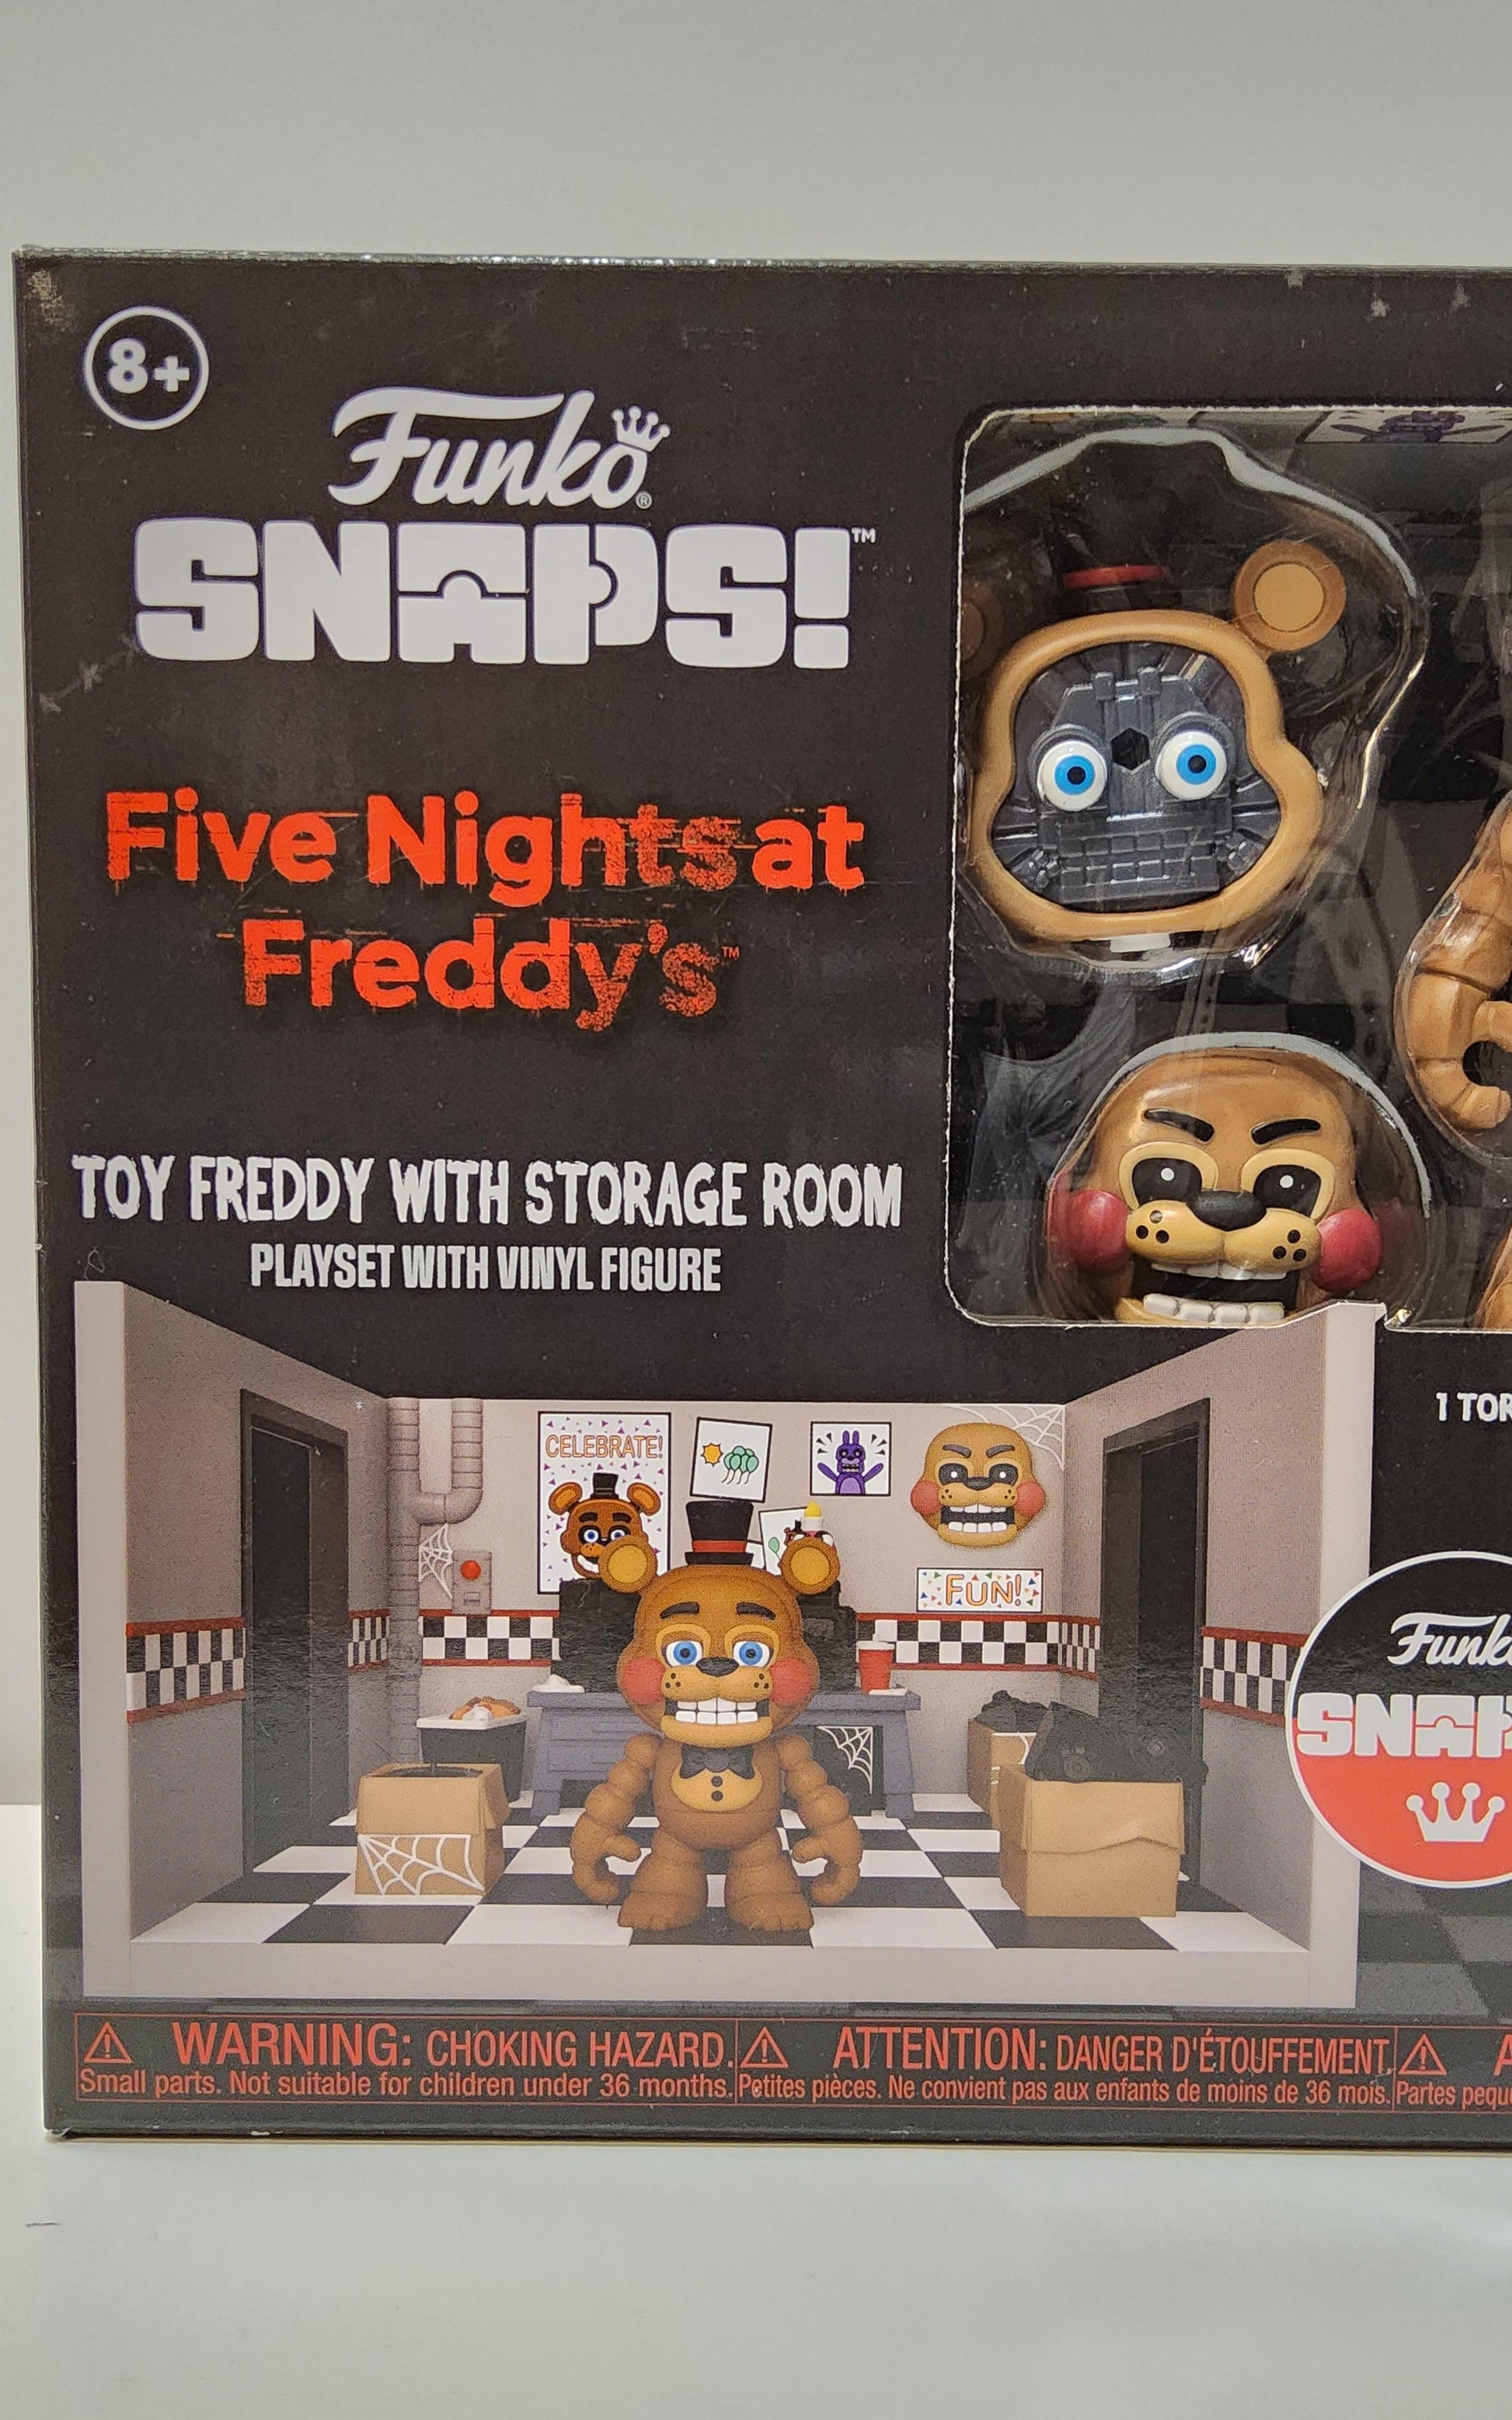 Funko Snaps! Five Nights at Freddy's Golden Freddy Vinyl Playset